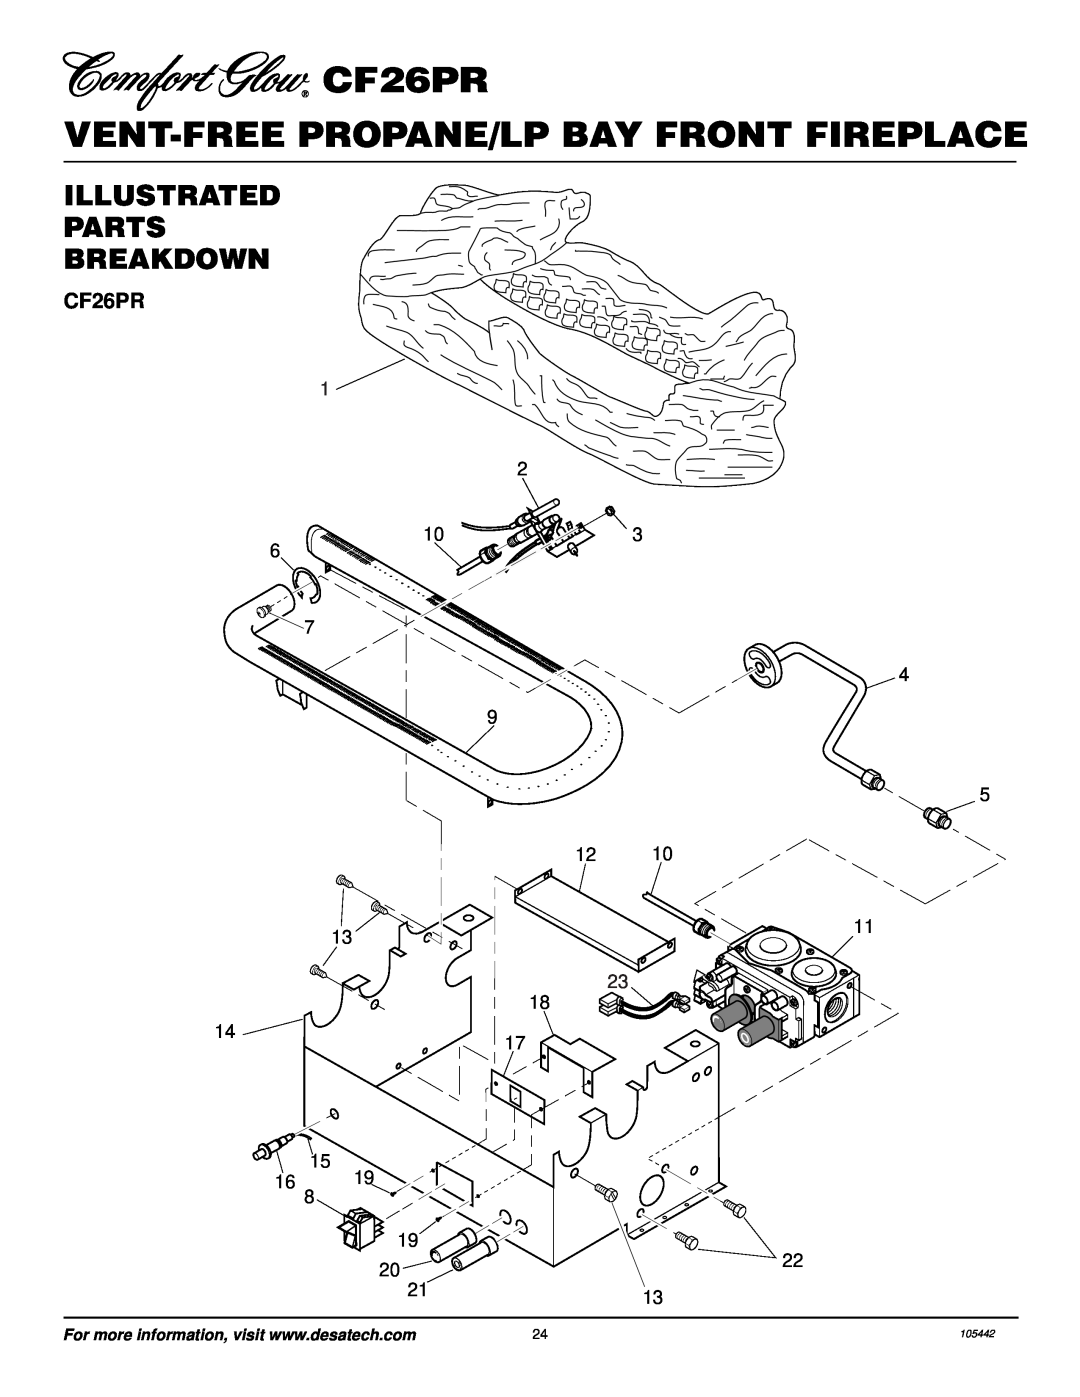 Desa installation manual Illustrated Parts Breakdown, CF26PR VENT-FREEPROPANE/LP BAY FRONT FIREPLACE 